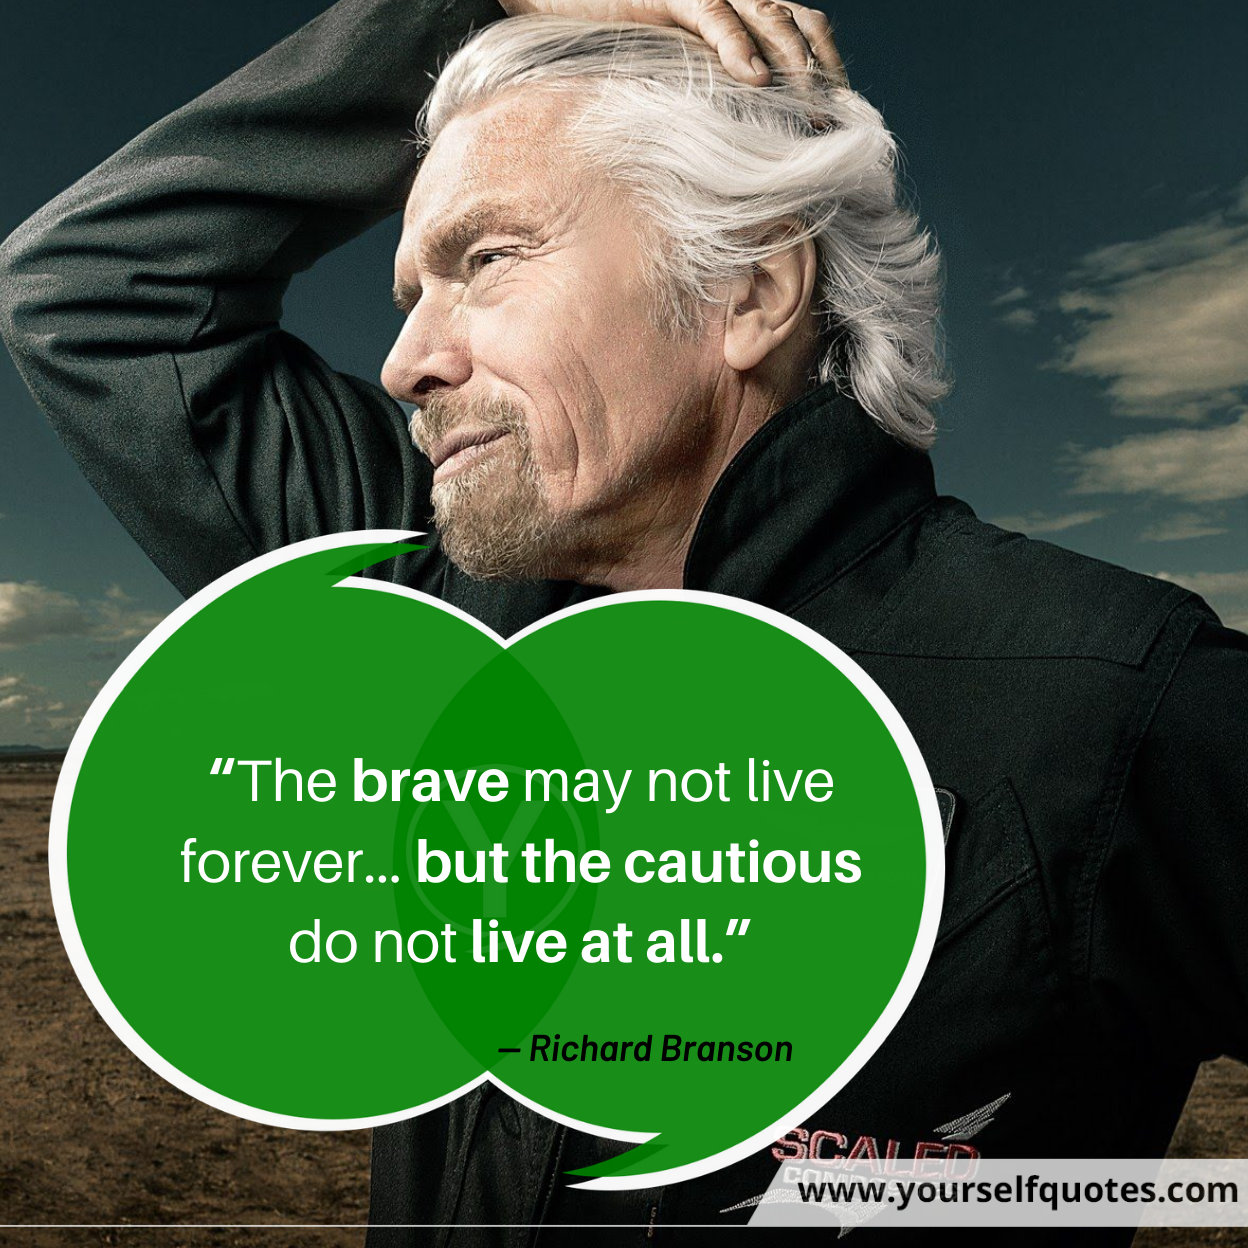 Richard Branson Quotes on Success